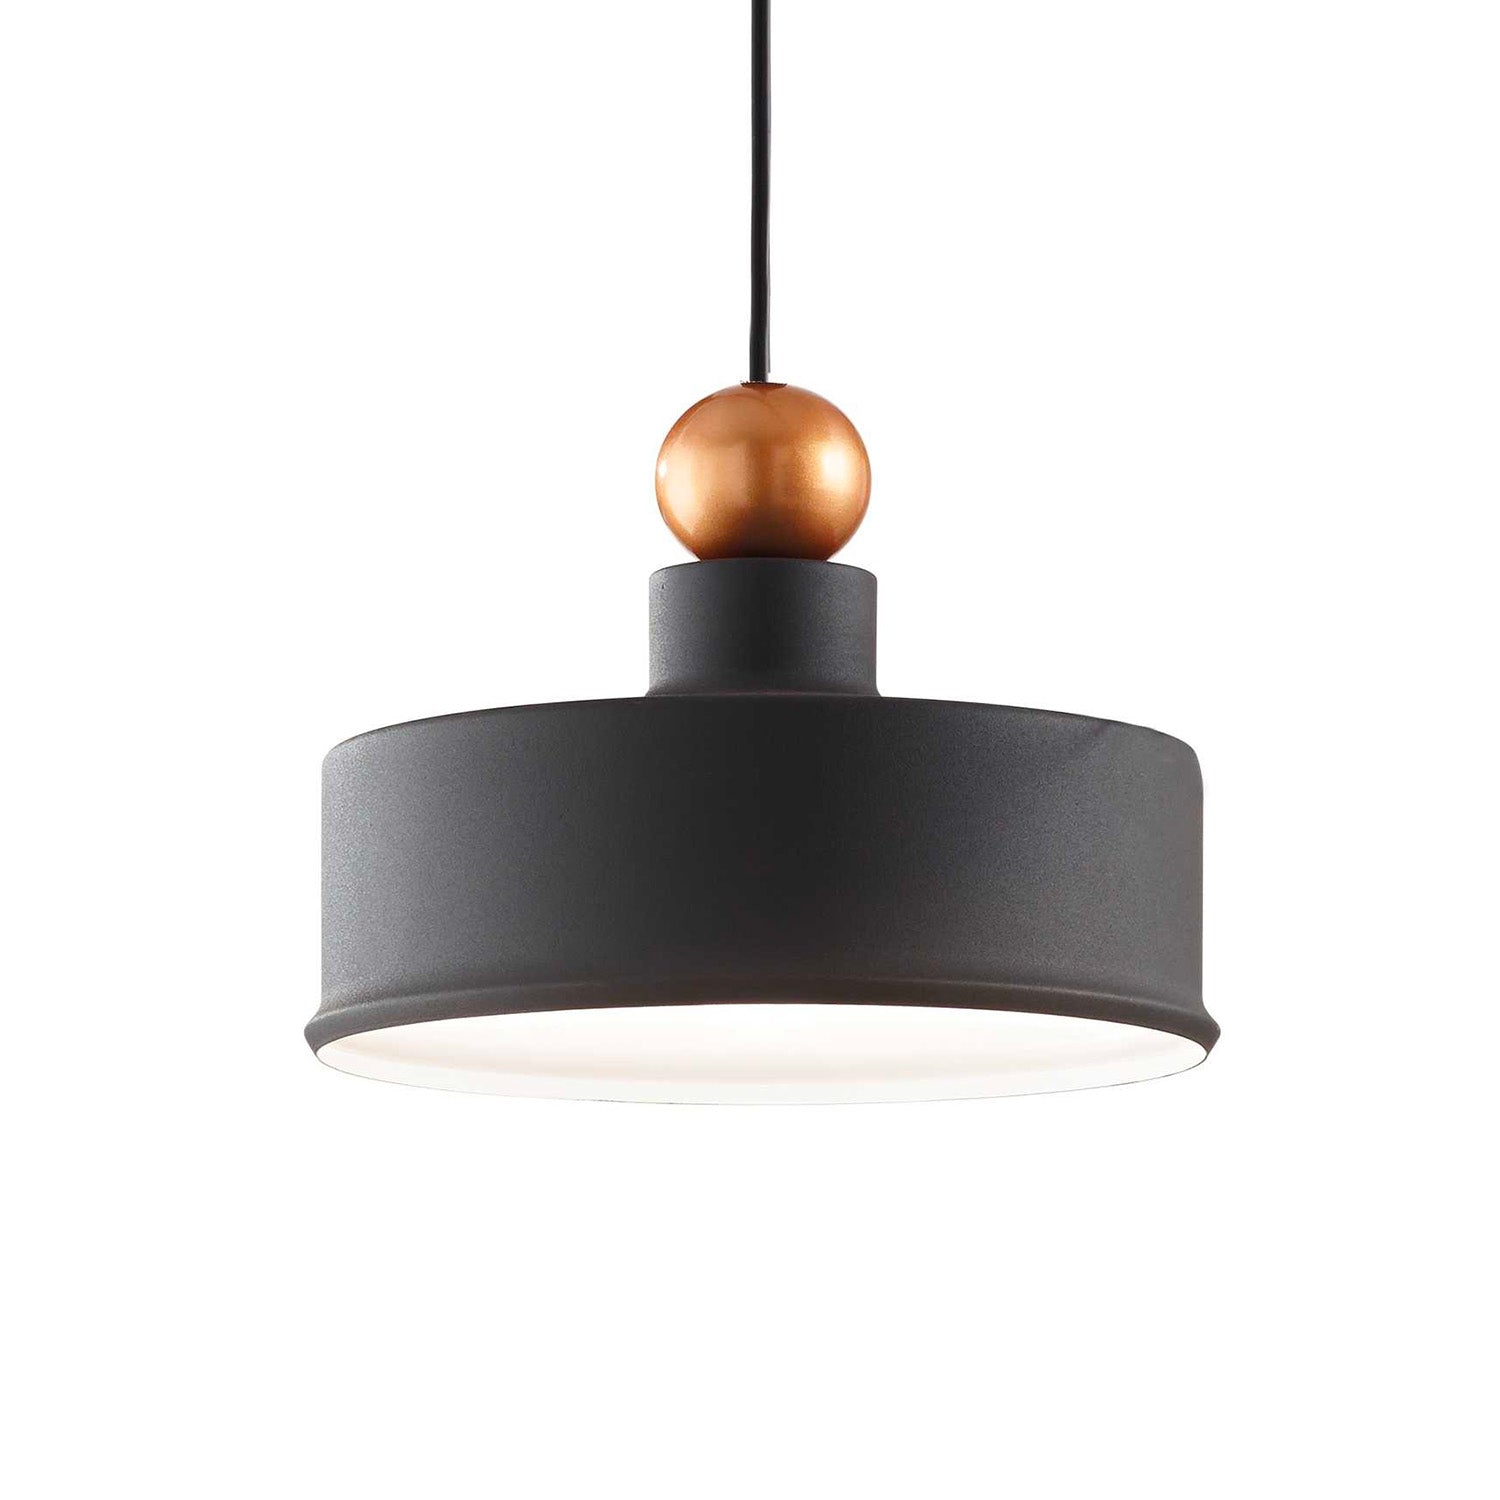 TRIADE 2 - Black and bronze industrial pendant light